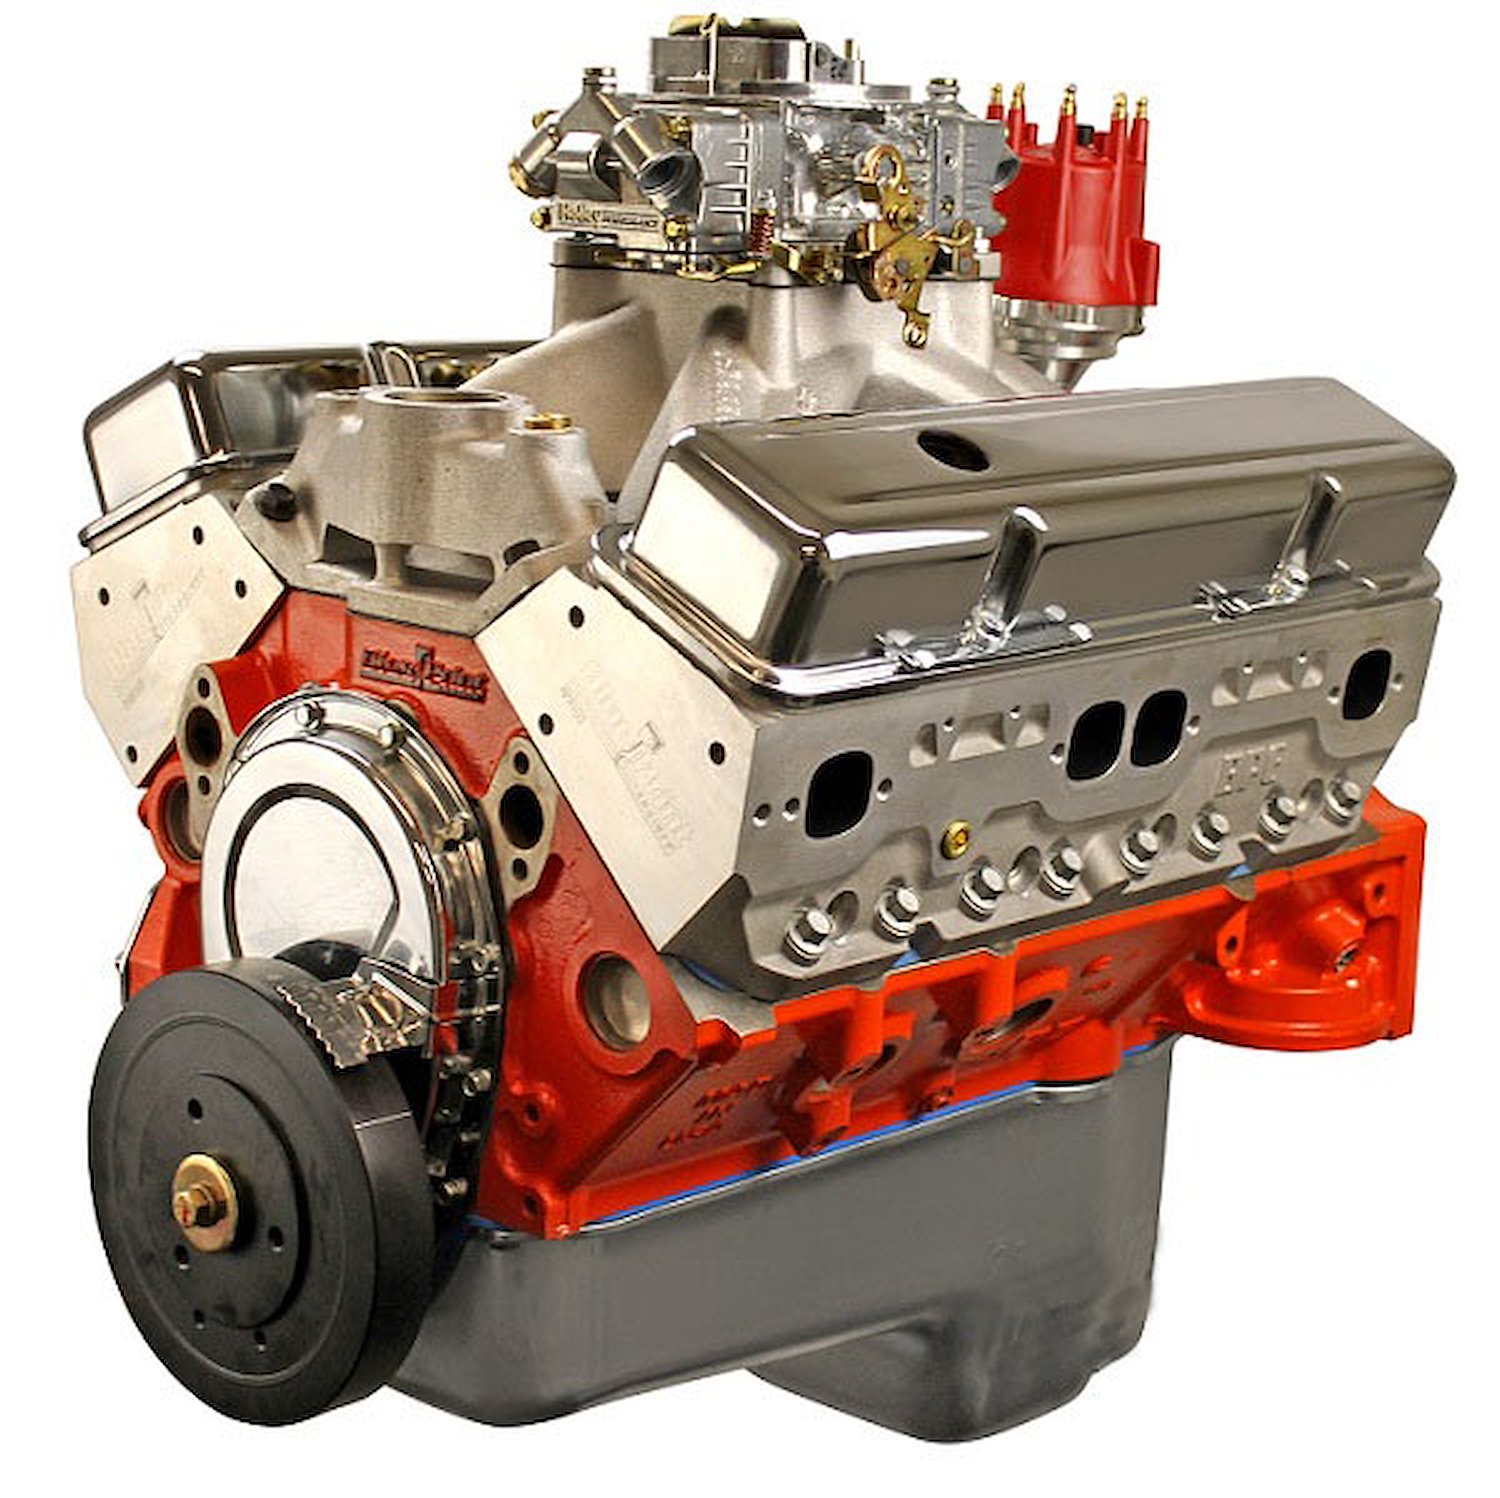 Pro Series 427ci Small Block Chevy Dress Engine 540 HP